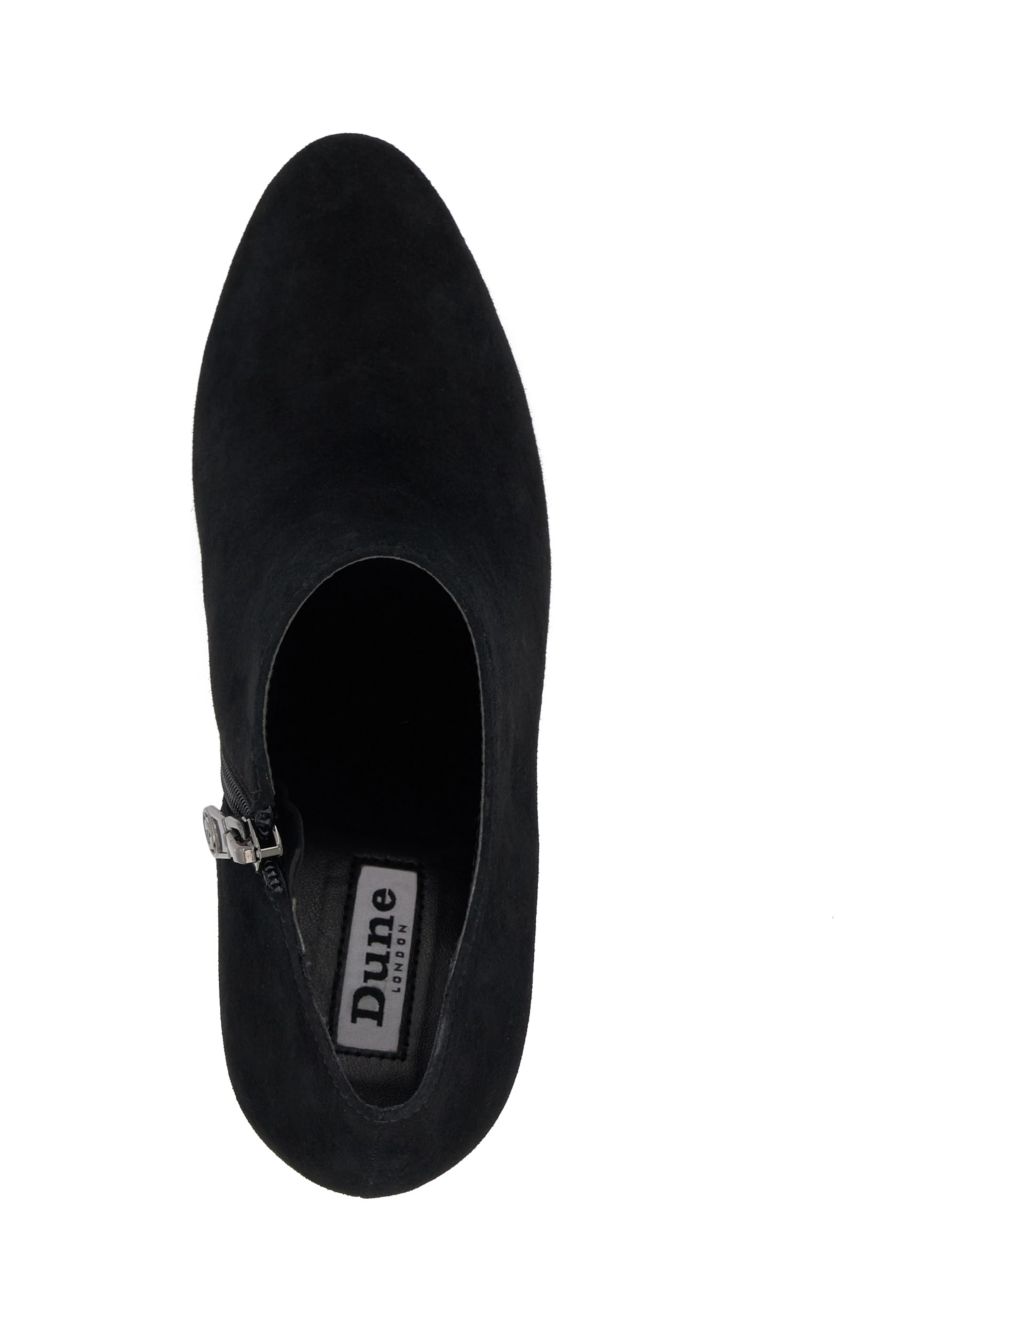 Suede Stiletto Heel Shoe Boots image 3